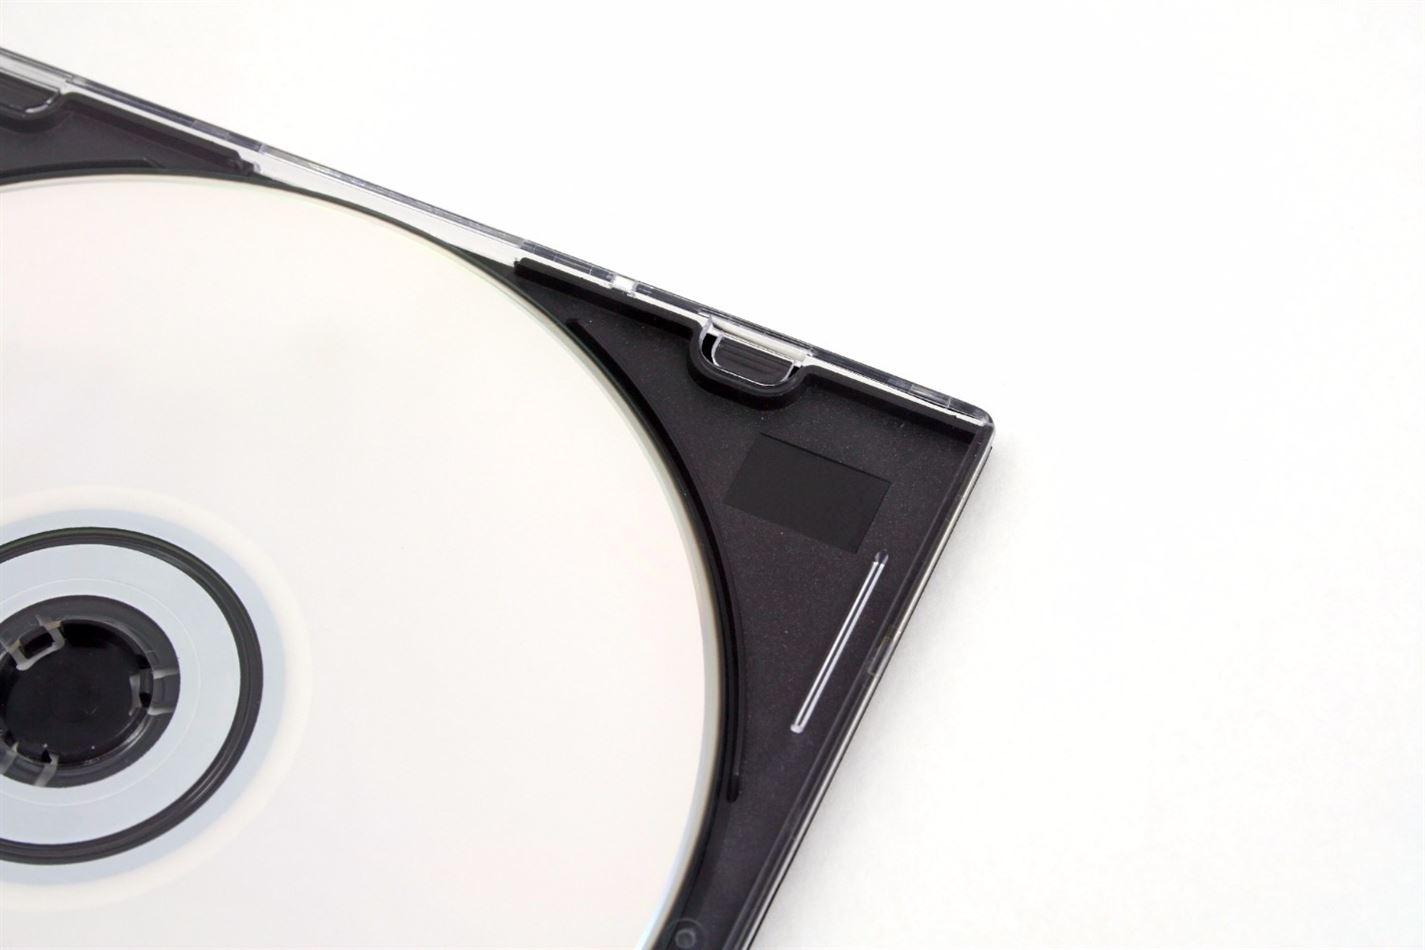 Toshiba HD-DVD HD-A3 Firmware Version 1.30 - Physical CD - NEW - UK SELLER